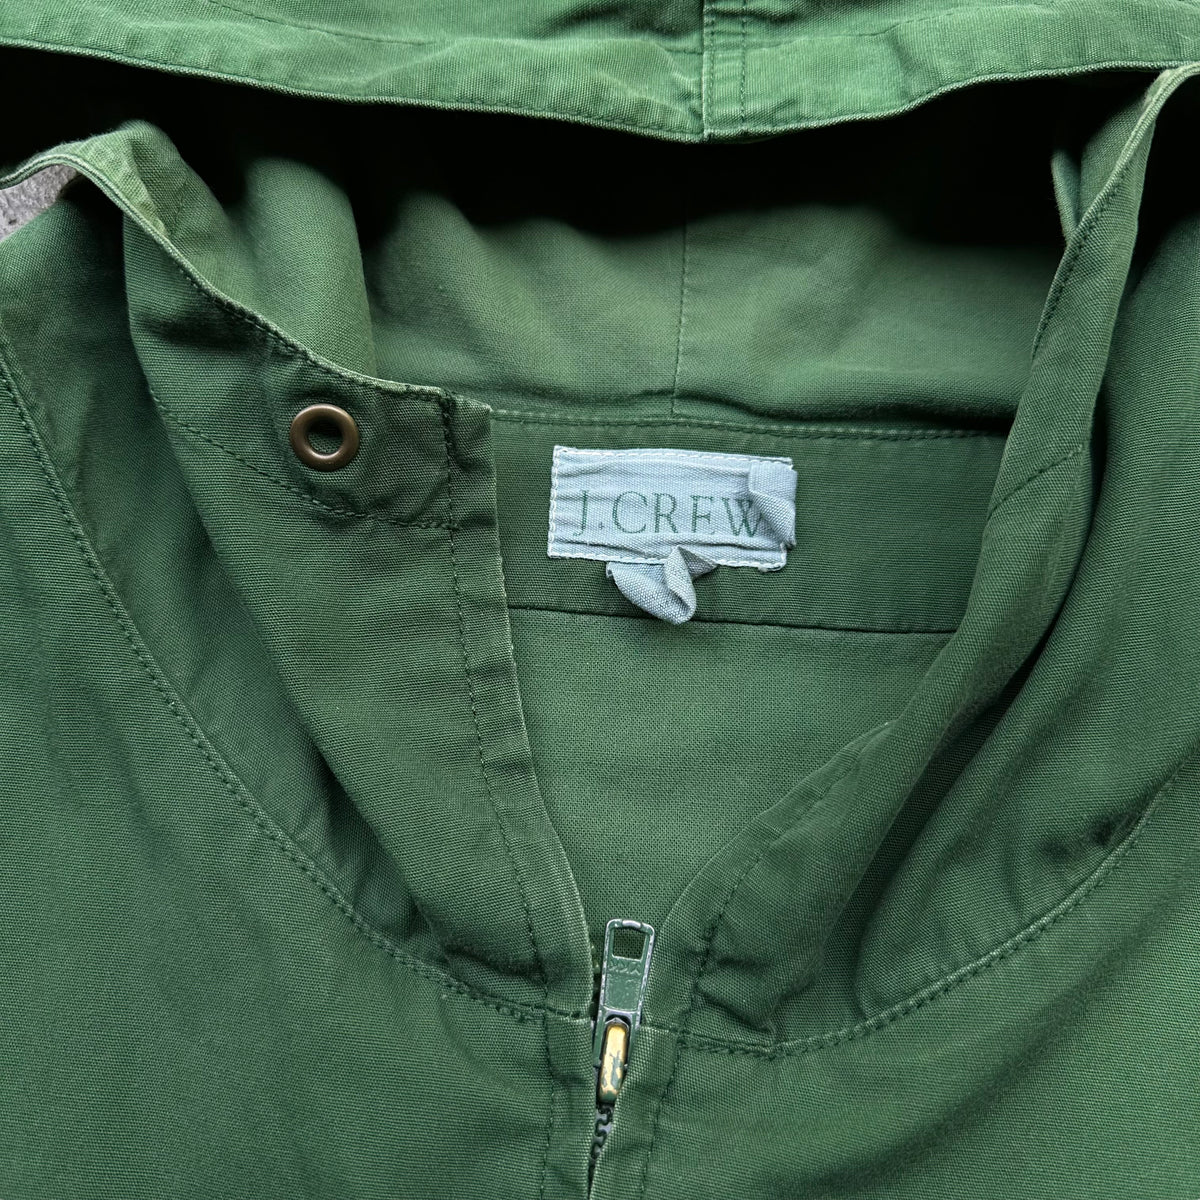 90s J crew cotton jacket small – Vintage Sponsor